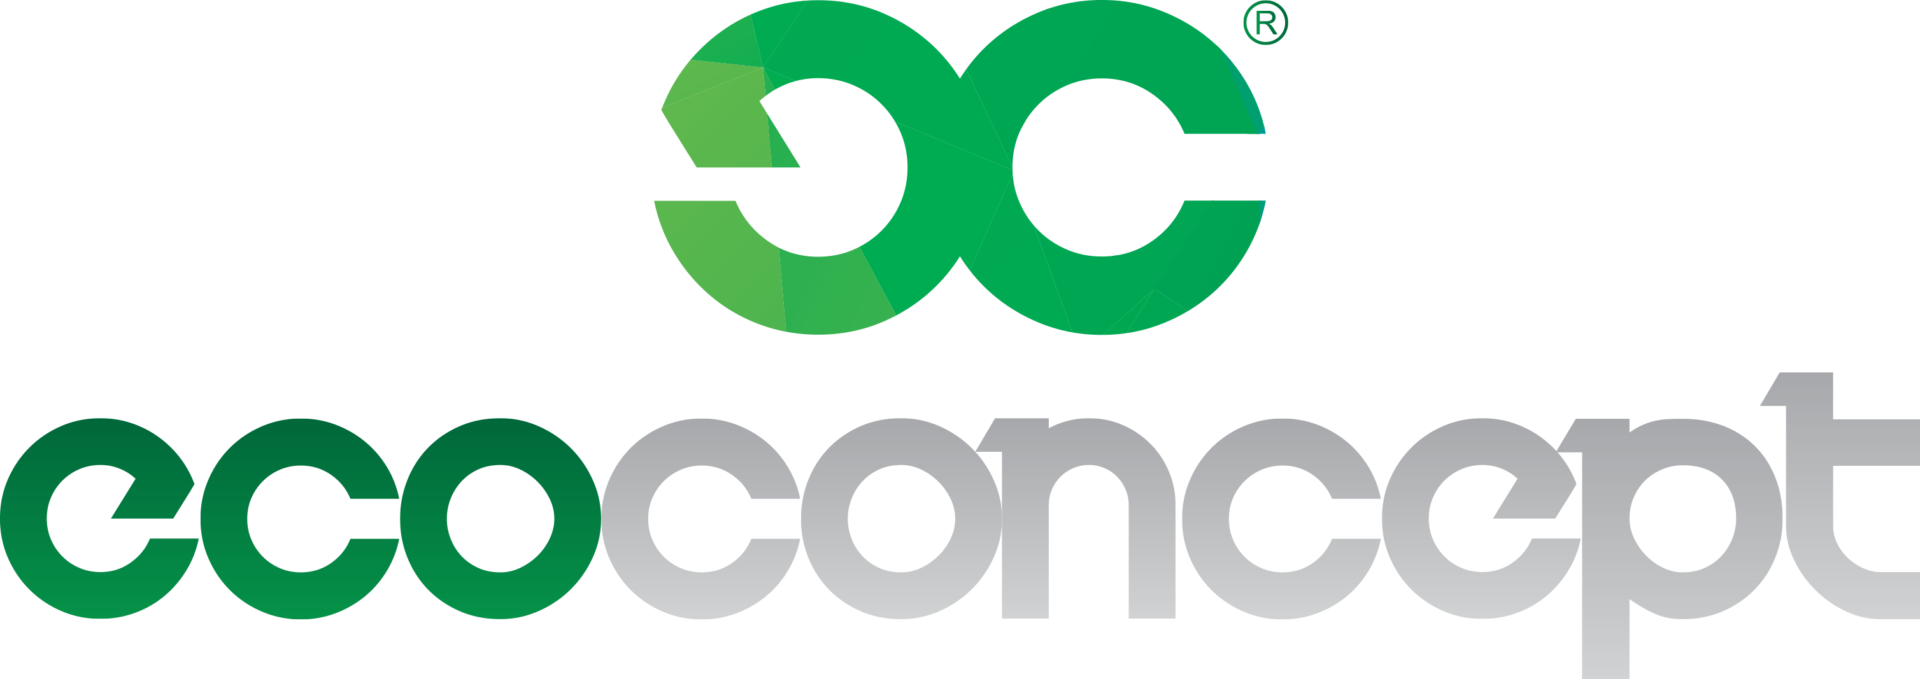 Logotipo_Ecoconcept